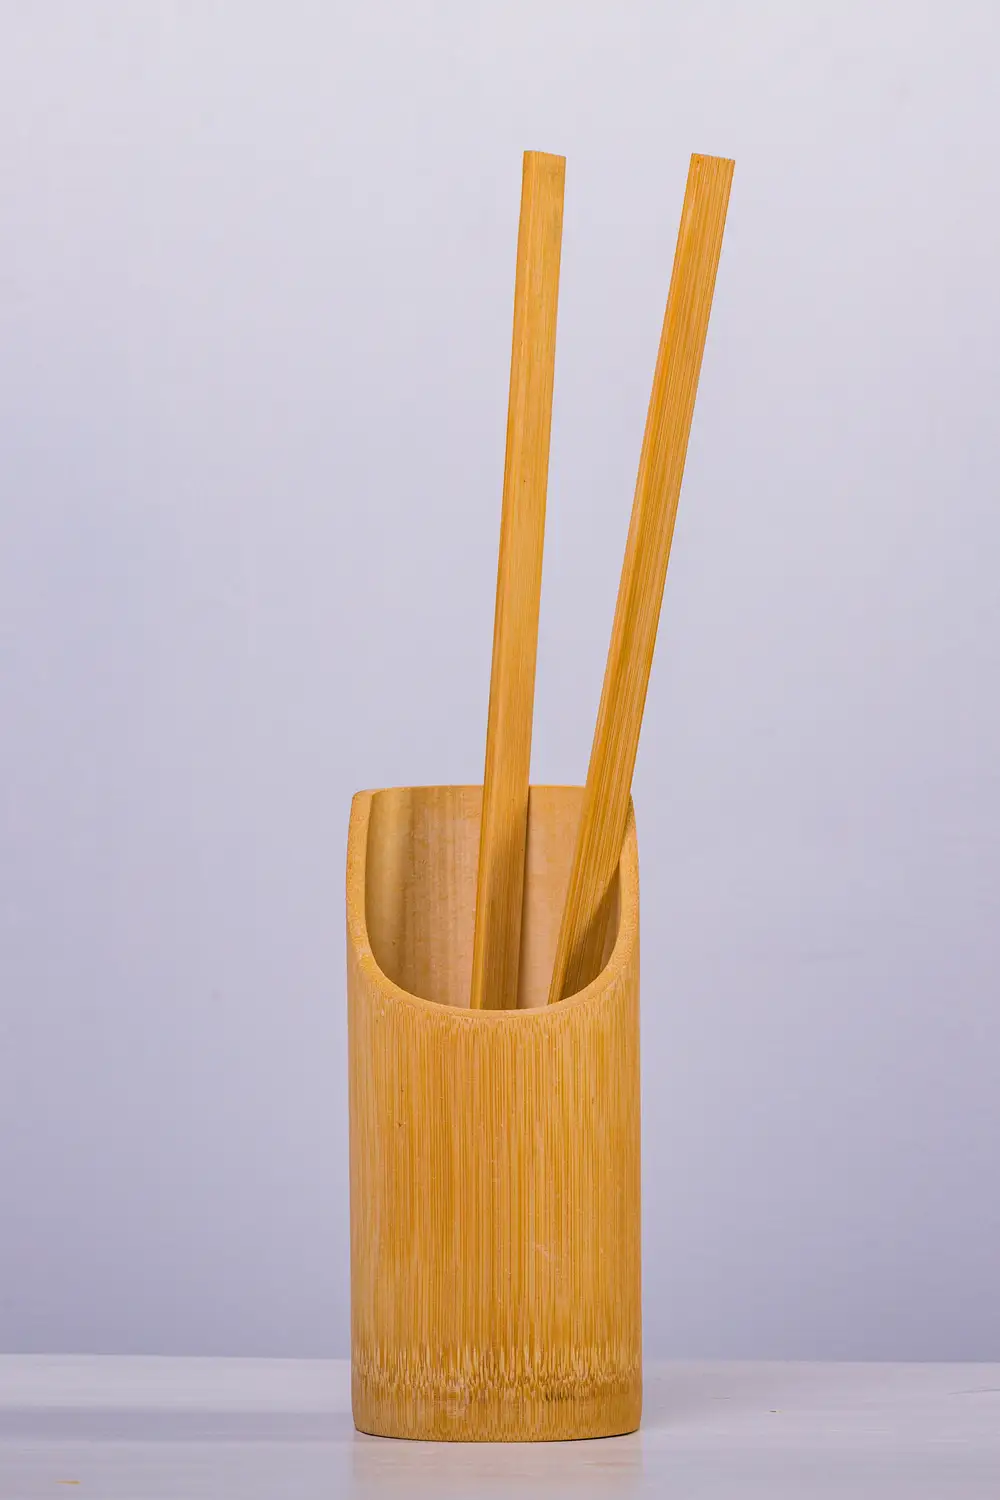 Wooden chop sticks